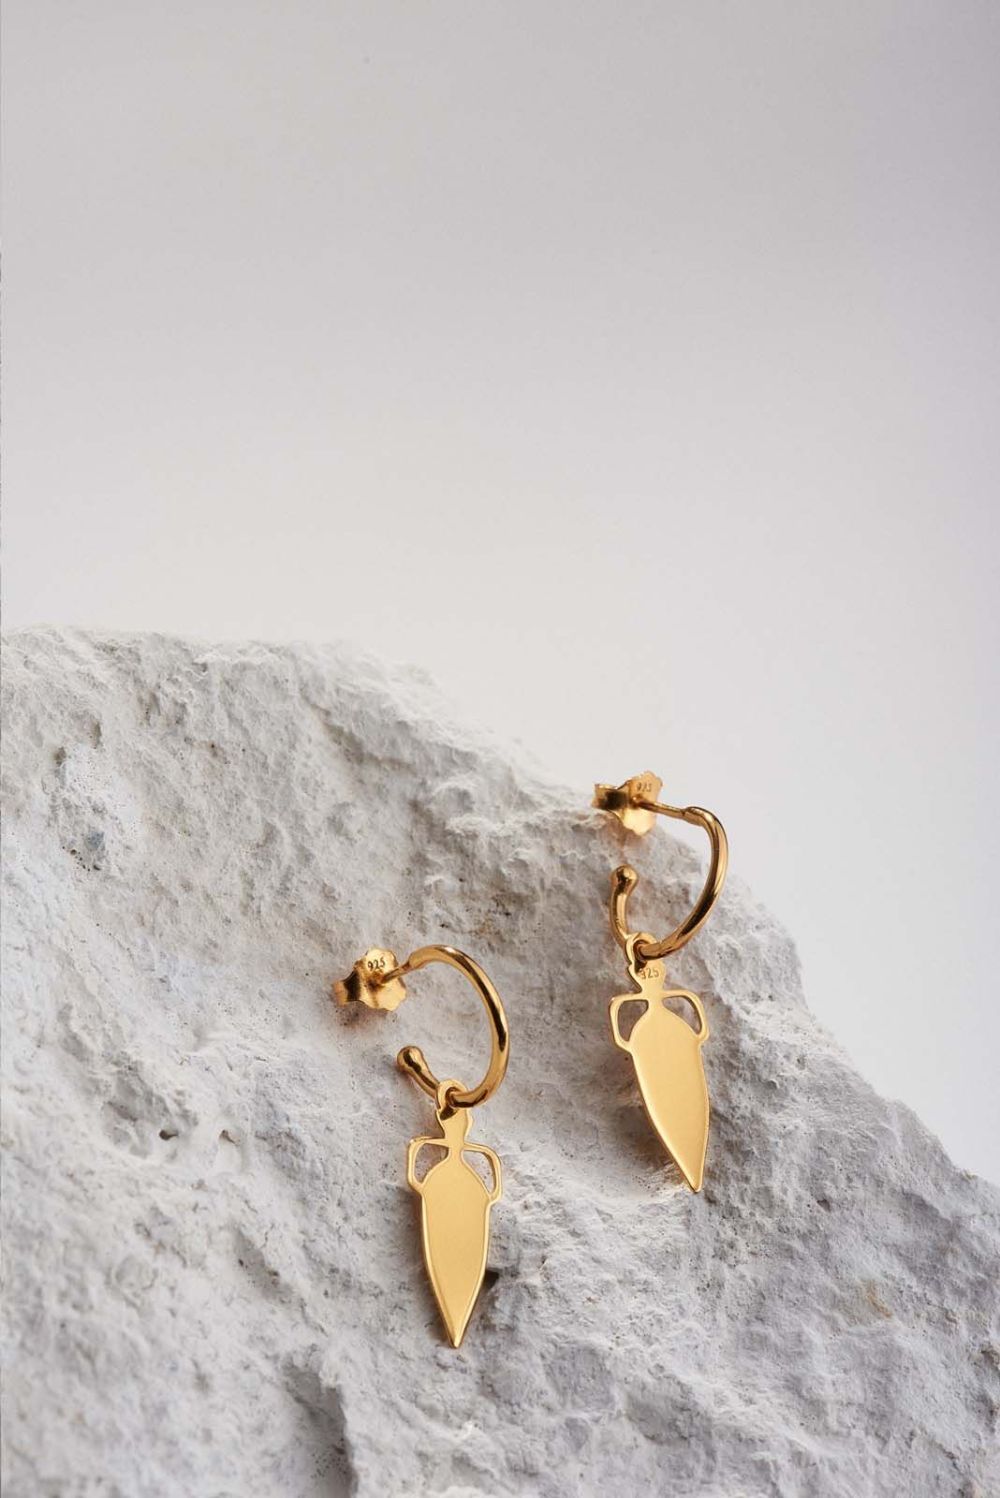 amphora earring in gold